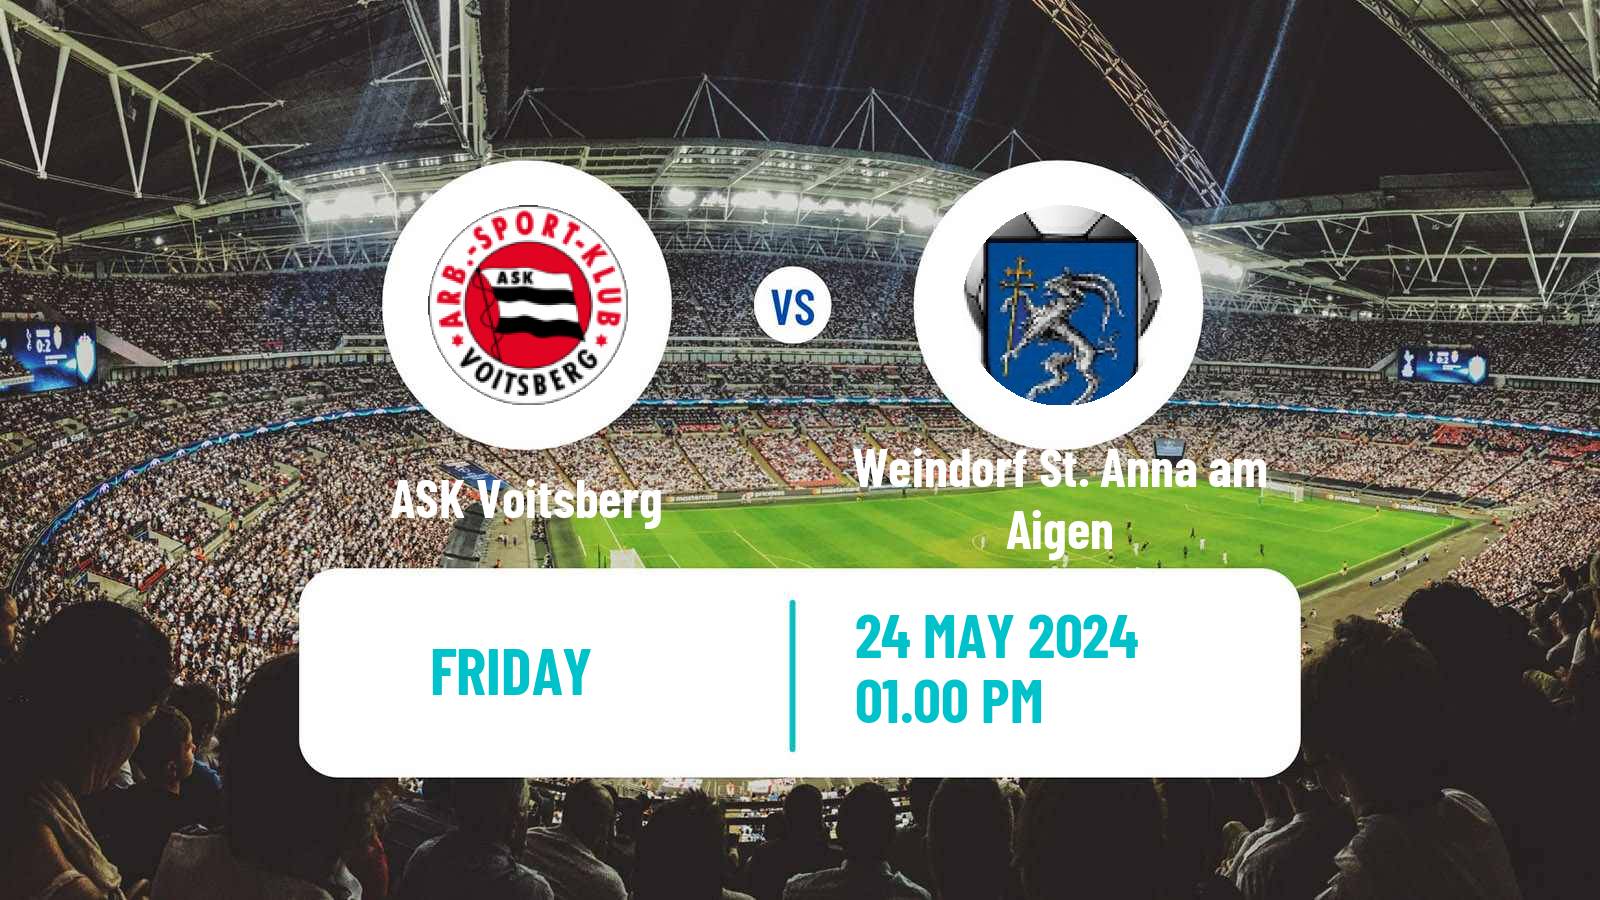 Soccer Austrian Regionalliga Central ASK Voitsberg - Weindorf St. Anna am Aigen